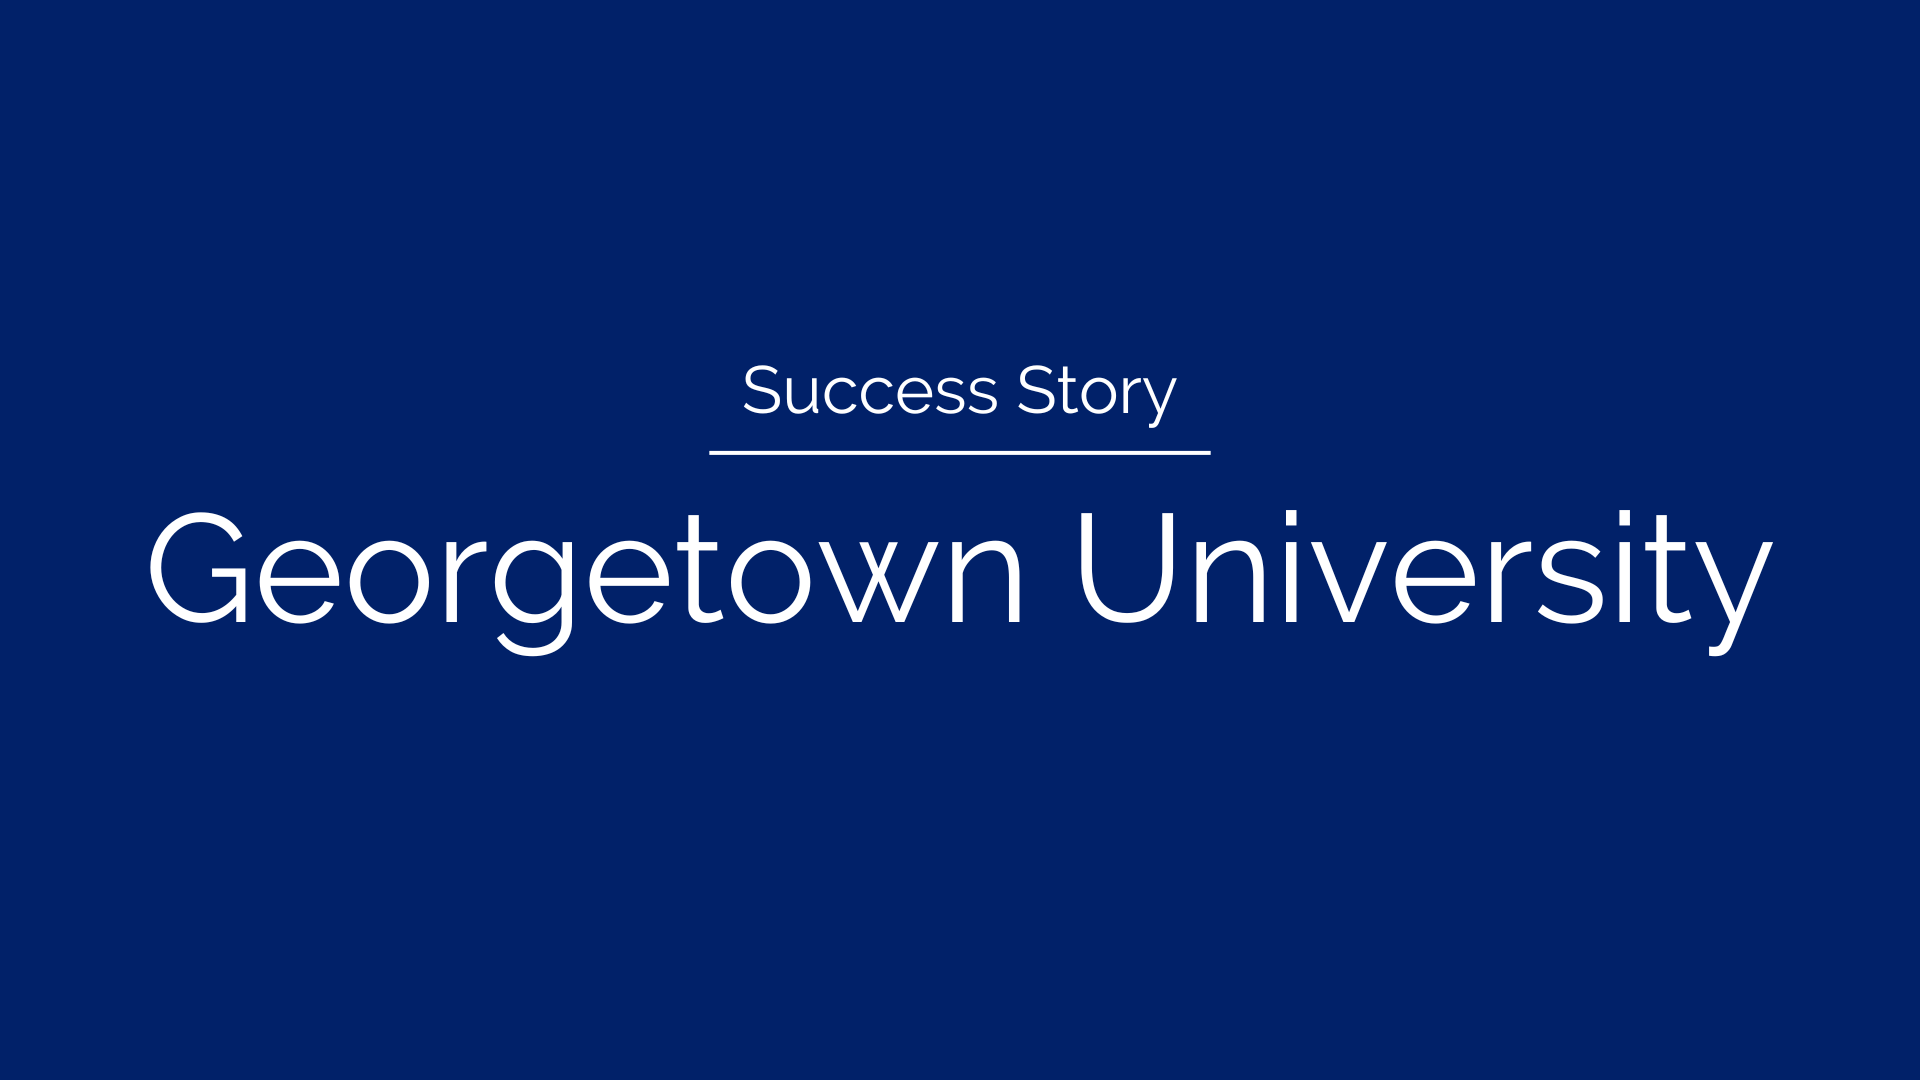 Success Story: Georgetown University